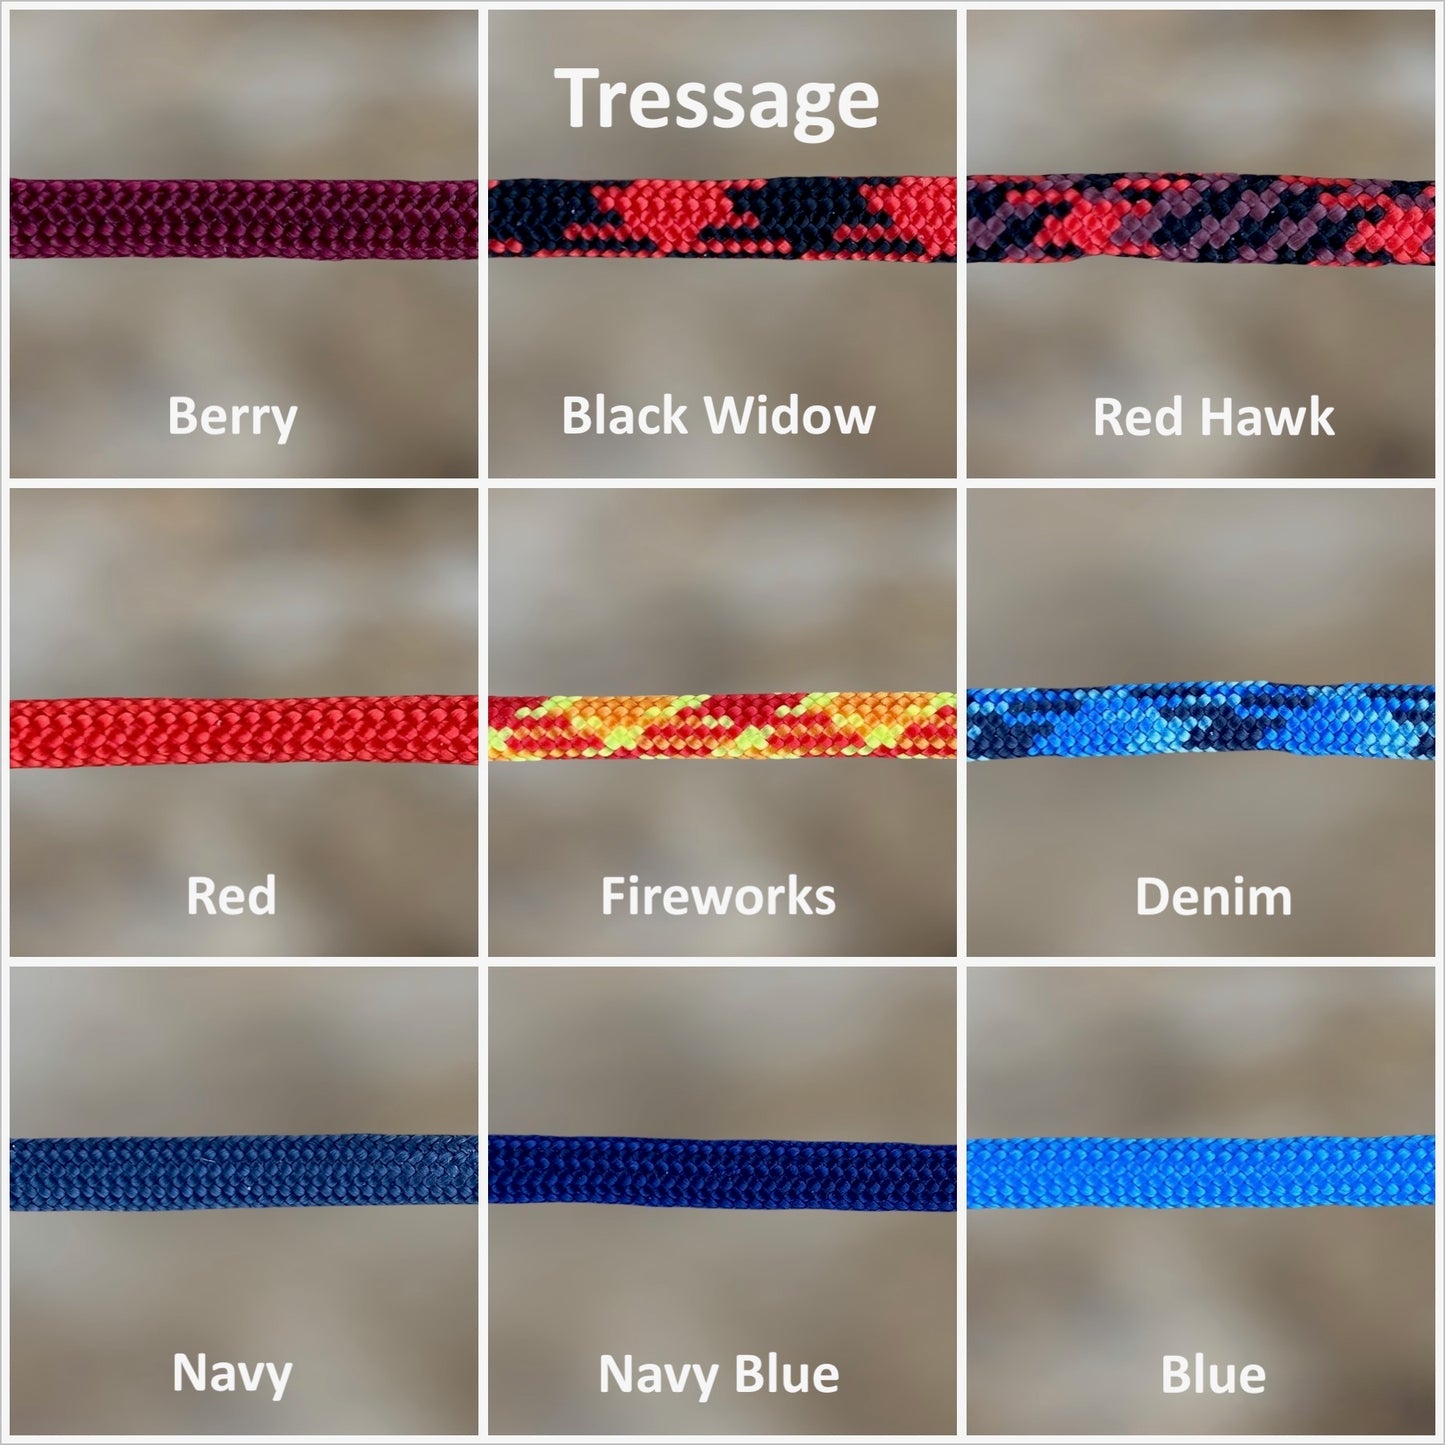 tressage - option couleur - licou - licol - options licou - options licol - berry - black widow - rouge - red - bleu - blue - navy 